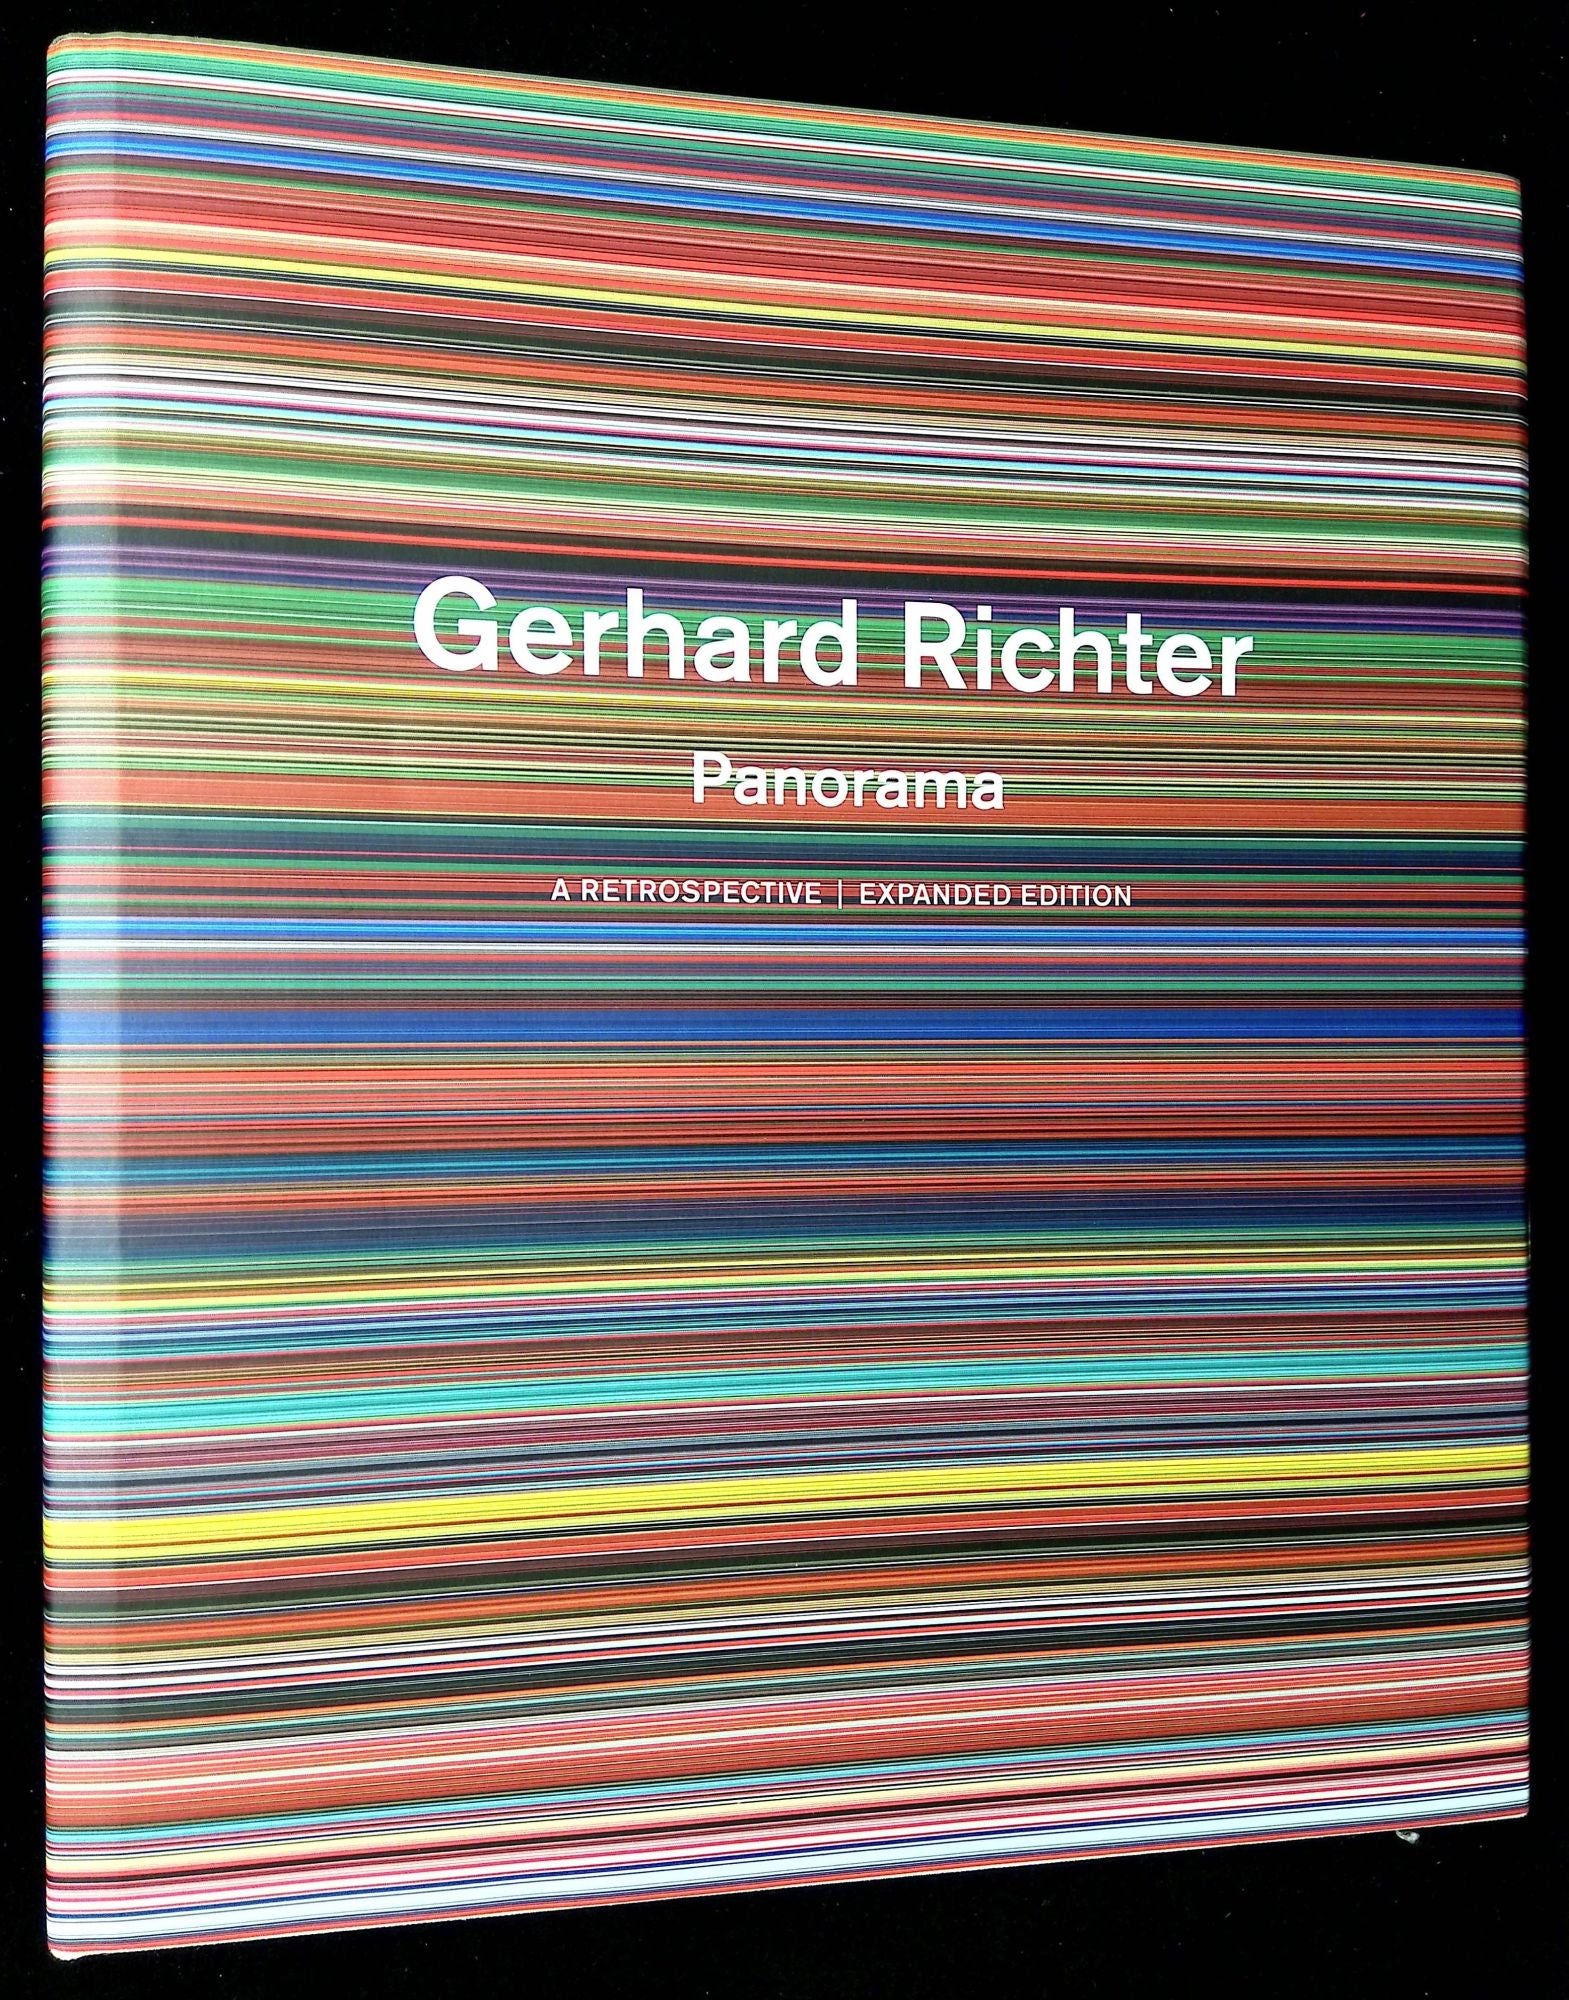 Gerhard Richter: Panorama by Gerhard Richter, Mark Godfrey, Nicholas Serota  on Common Crow Books